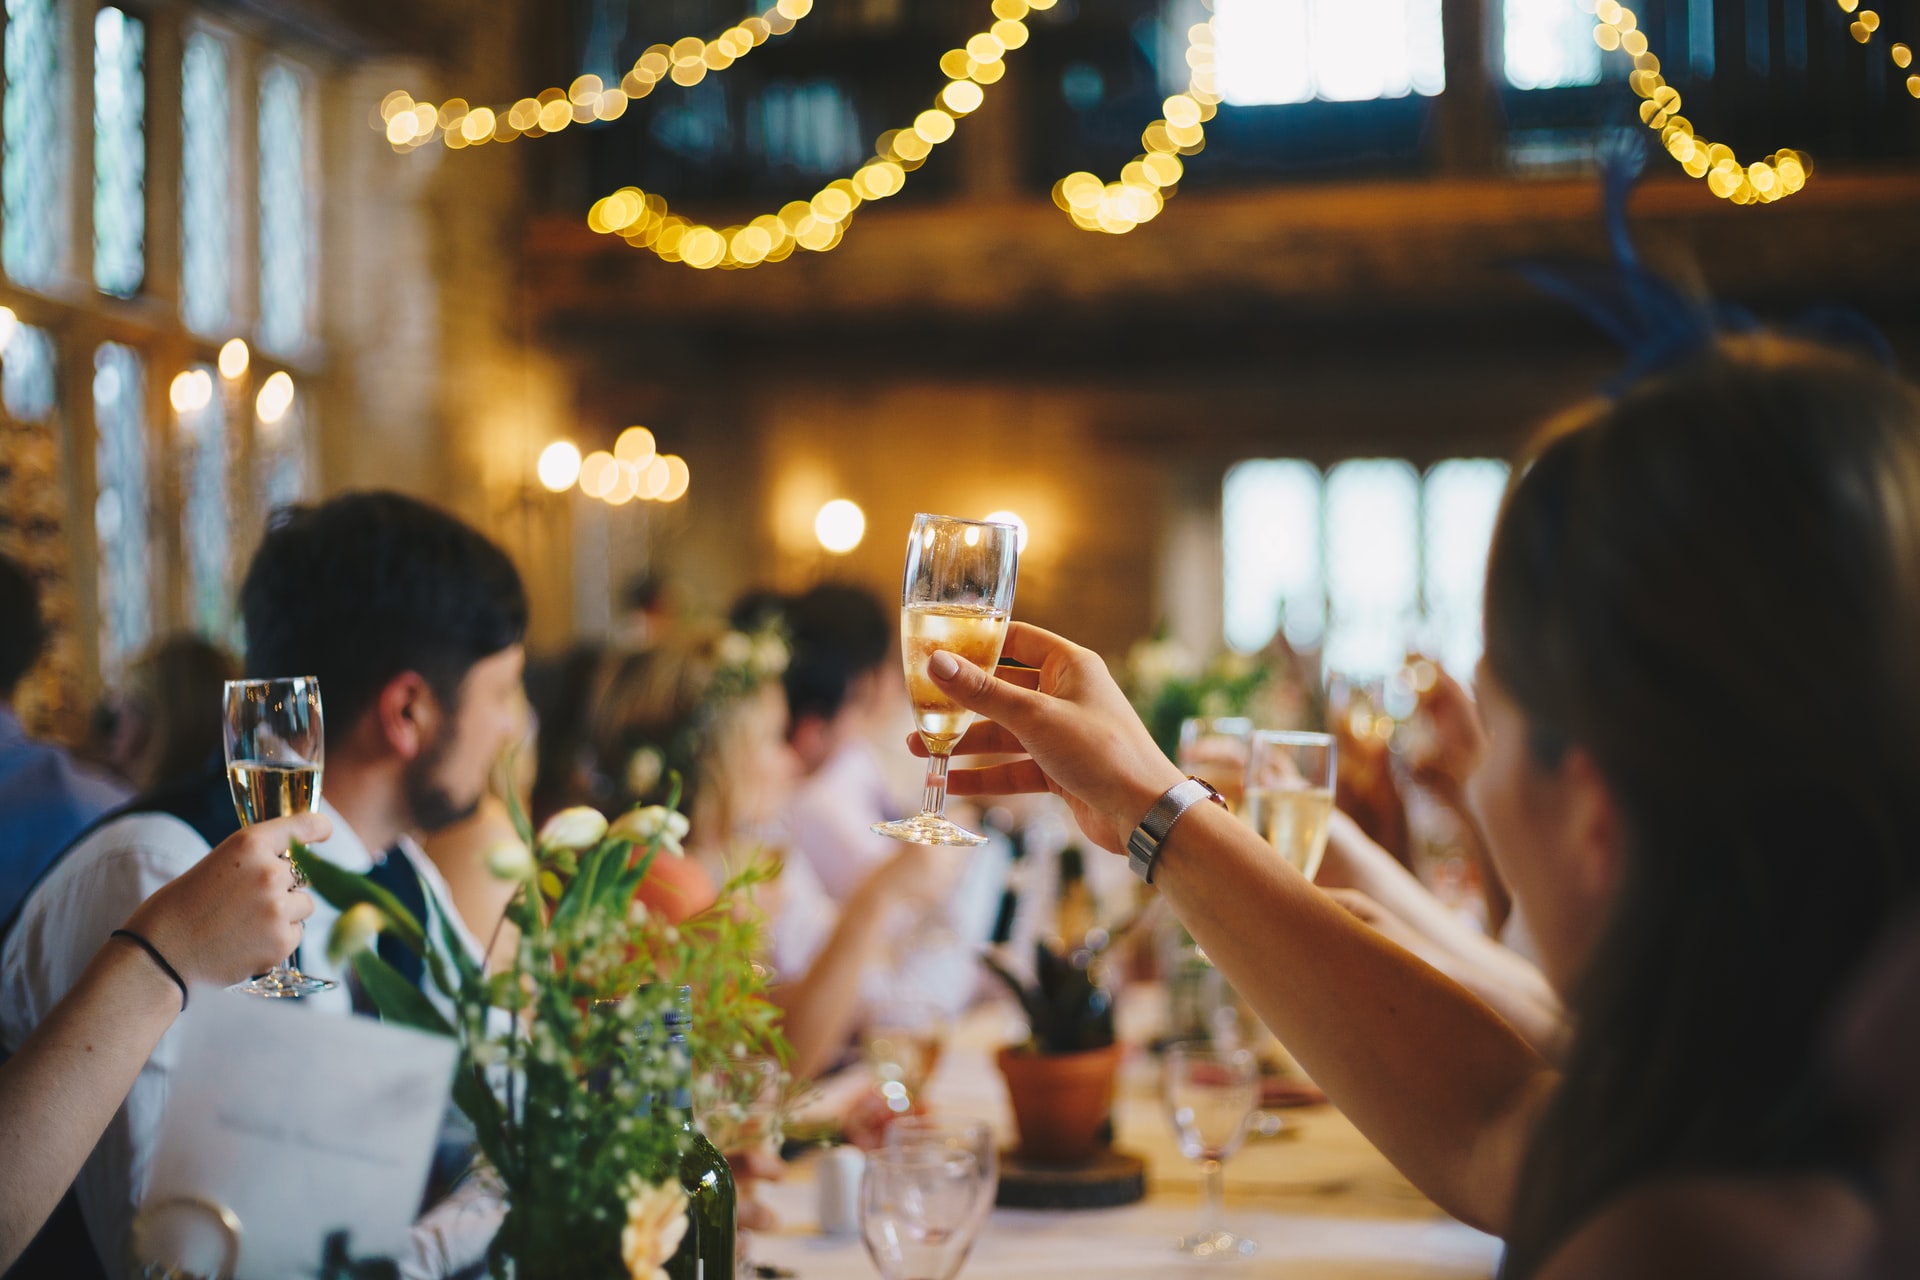 Wedding Venue Without Liquor License